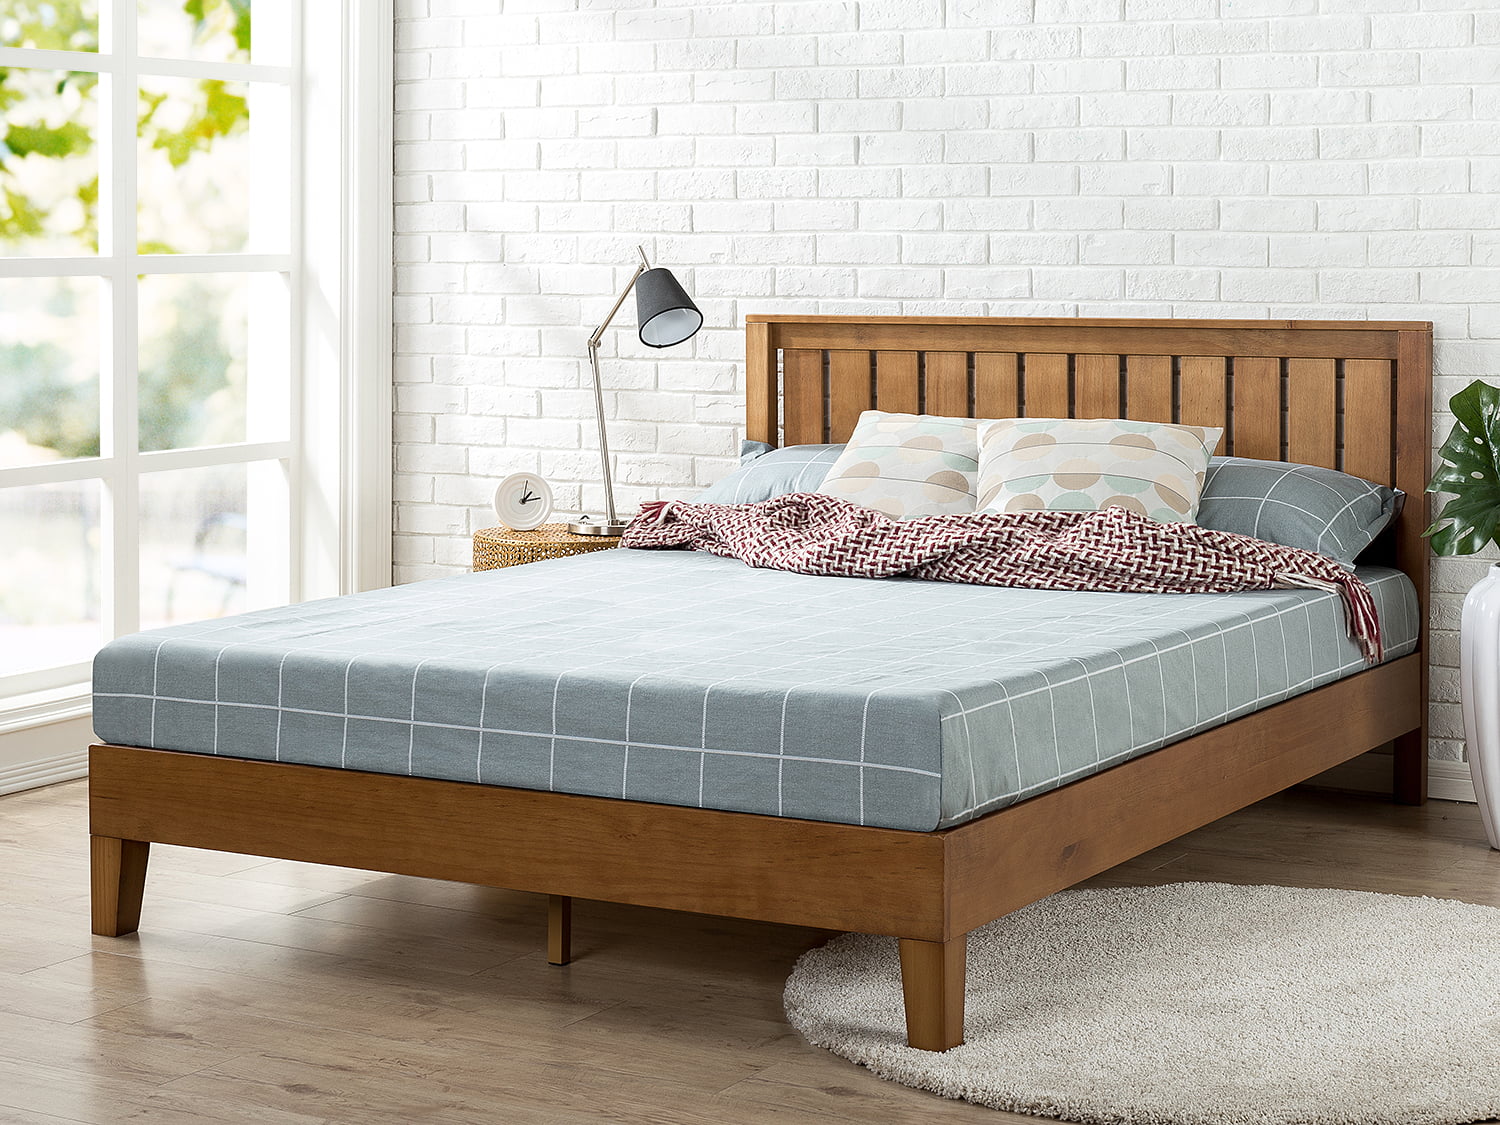 Zinus Wood Platform Bed With Headboard Flash Sales, 58% OFF | www.ganshoren.be